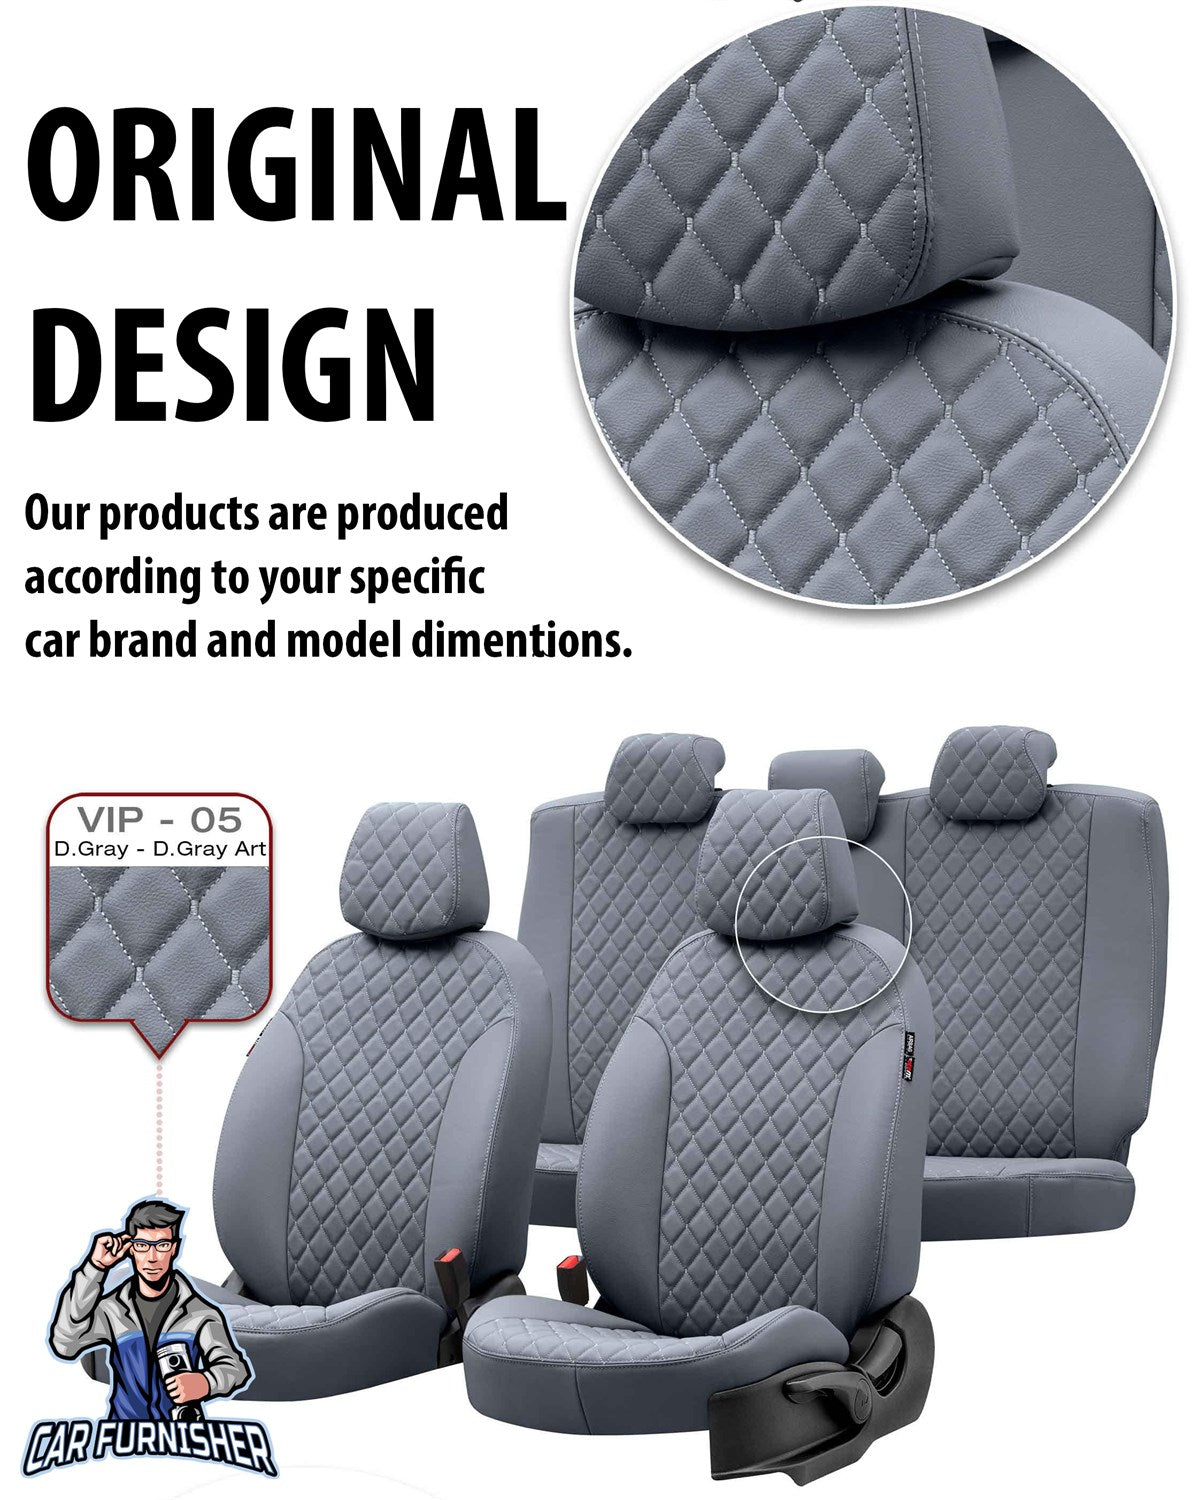 Isuzu Nkr Seat Covers Madrid Leather Design Beige Leather